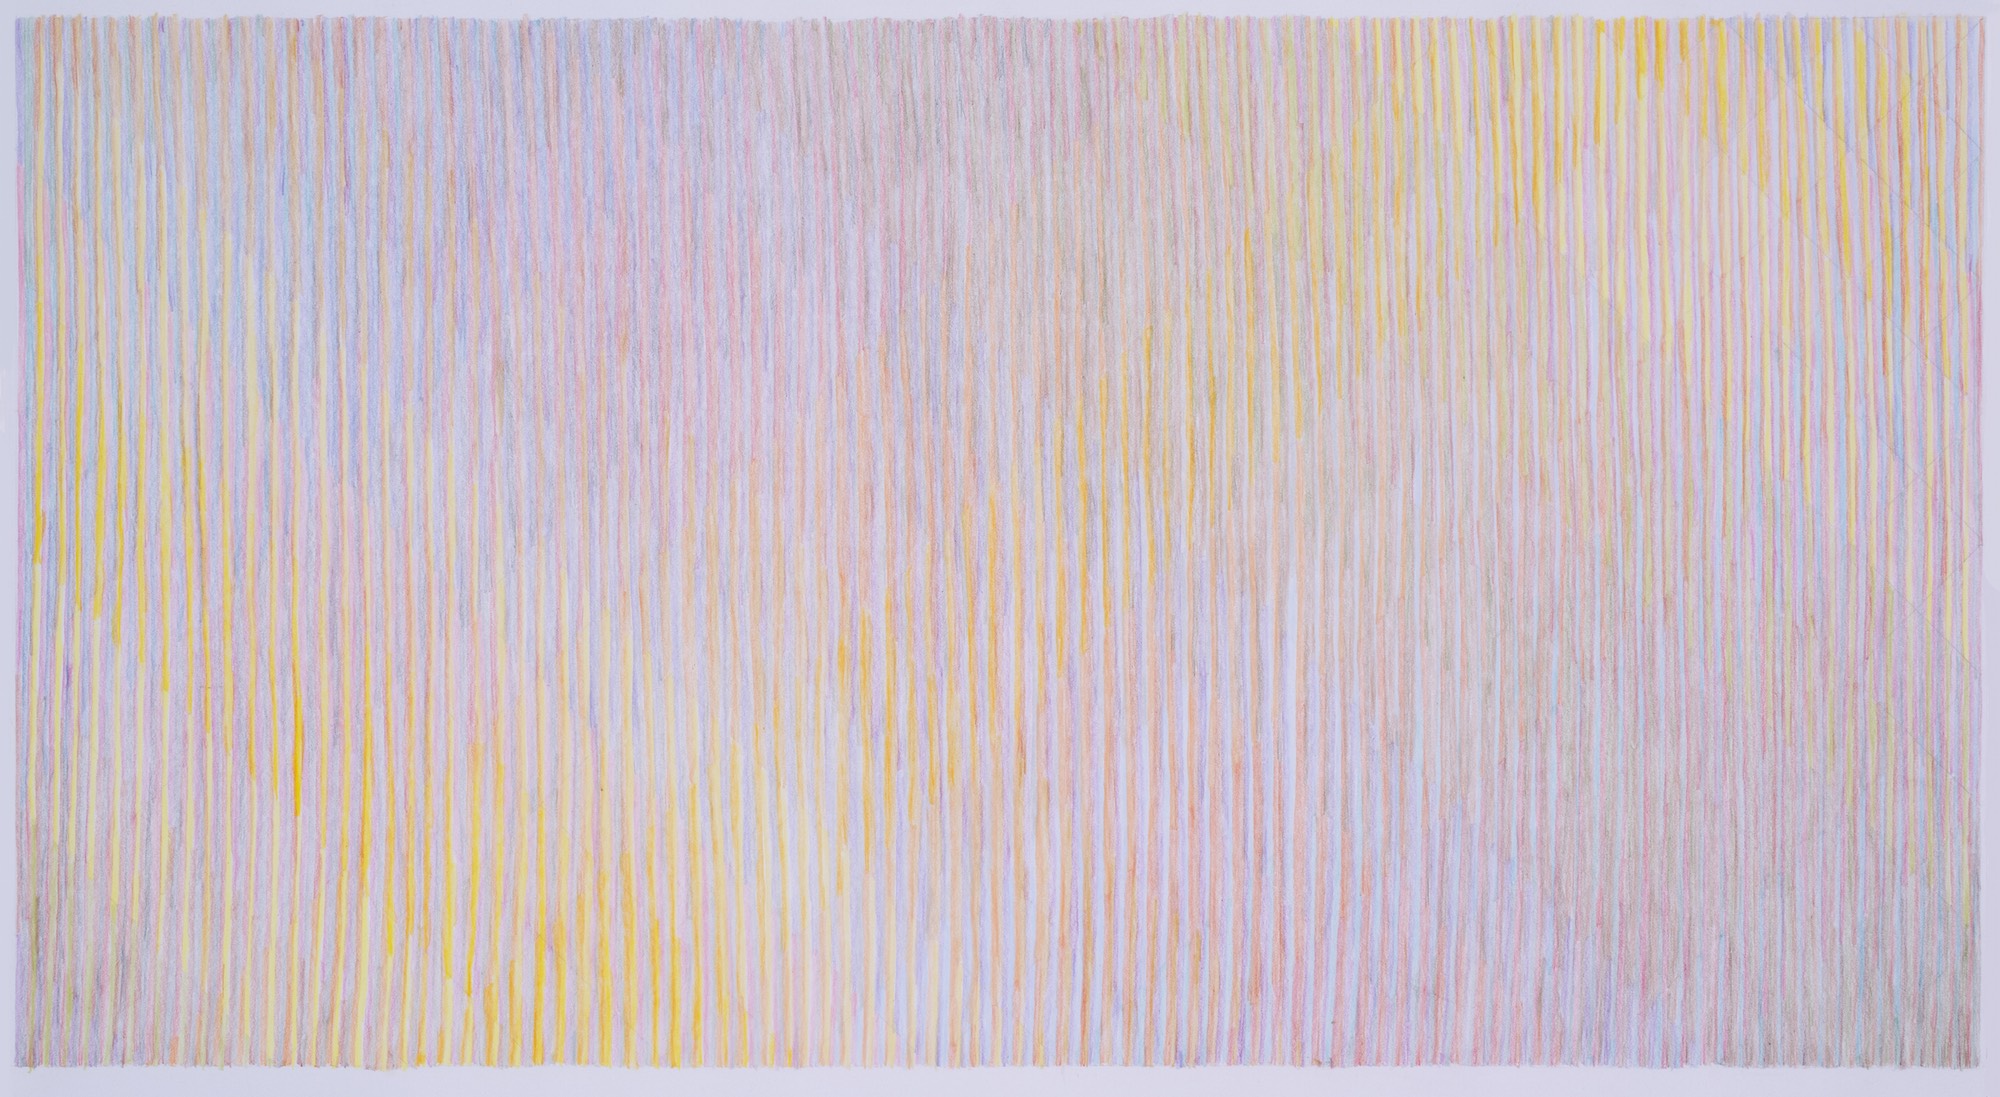   Stilled Life #10    Wax pastel on paper    25” x  16”  